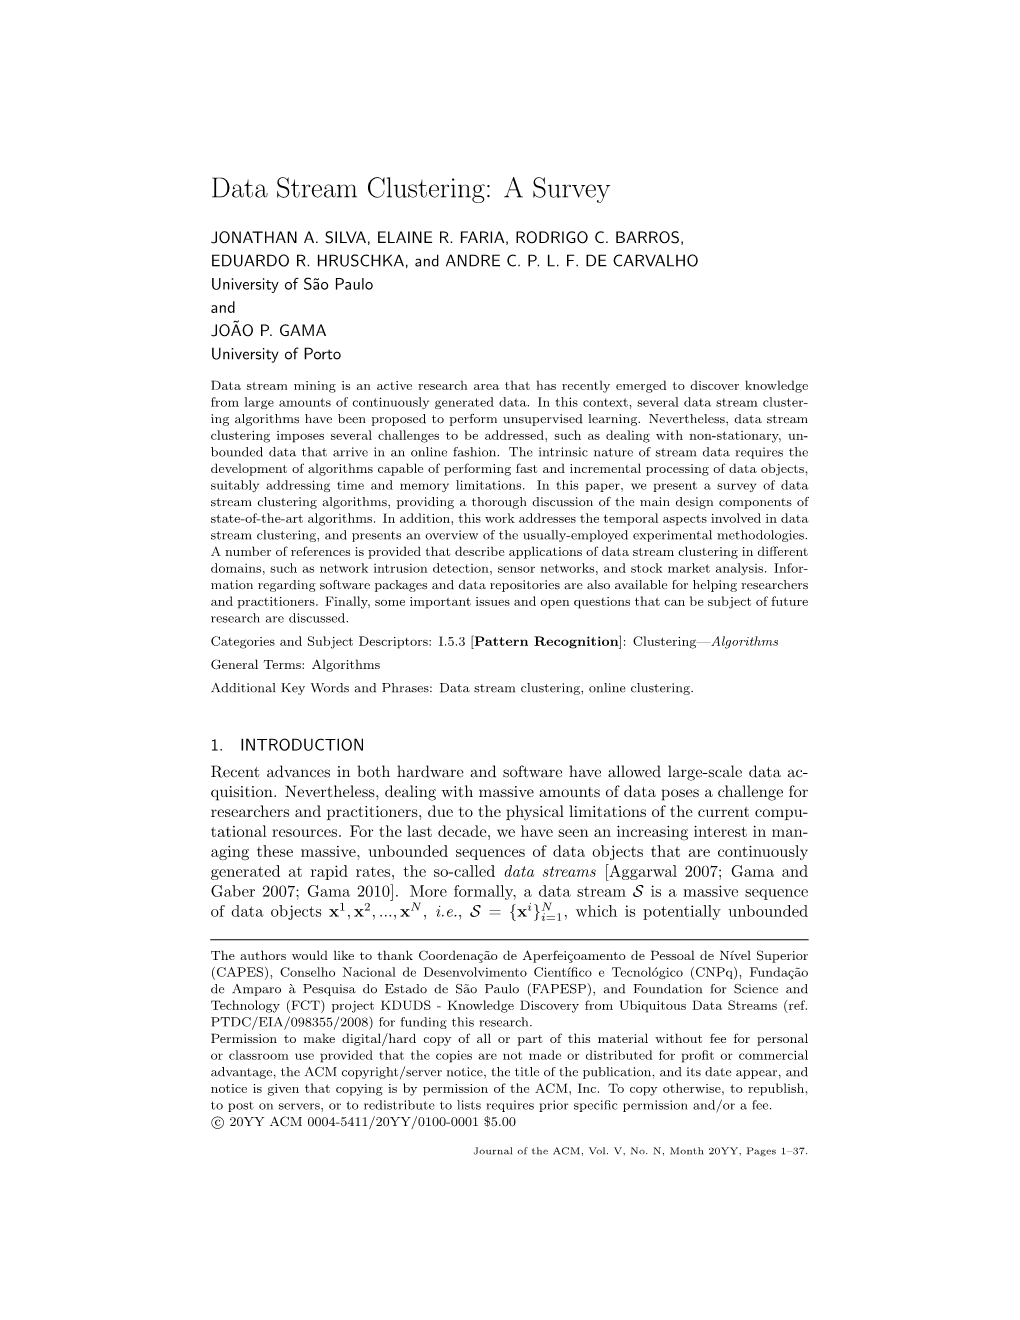 Data Stream Clustering: a Survey